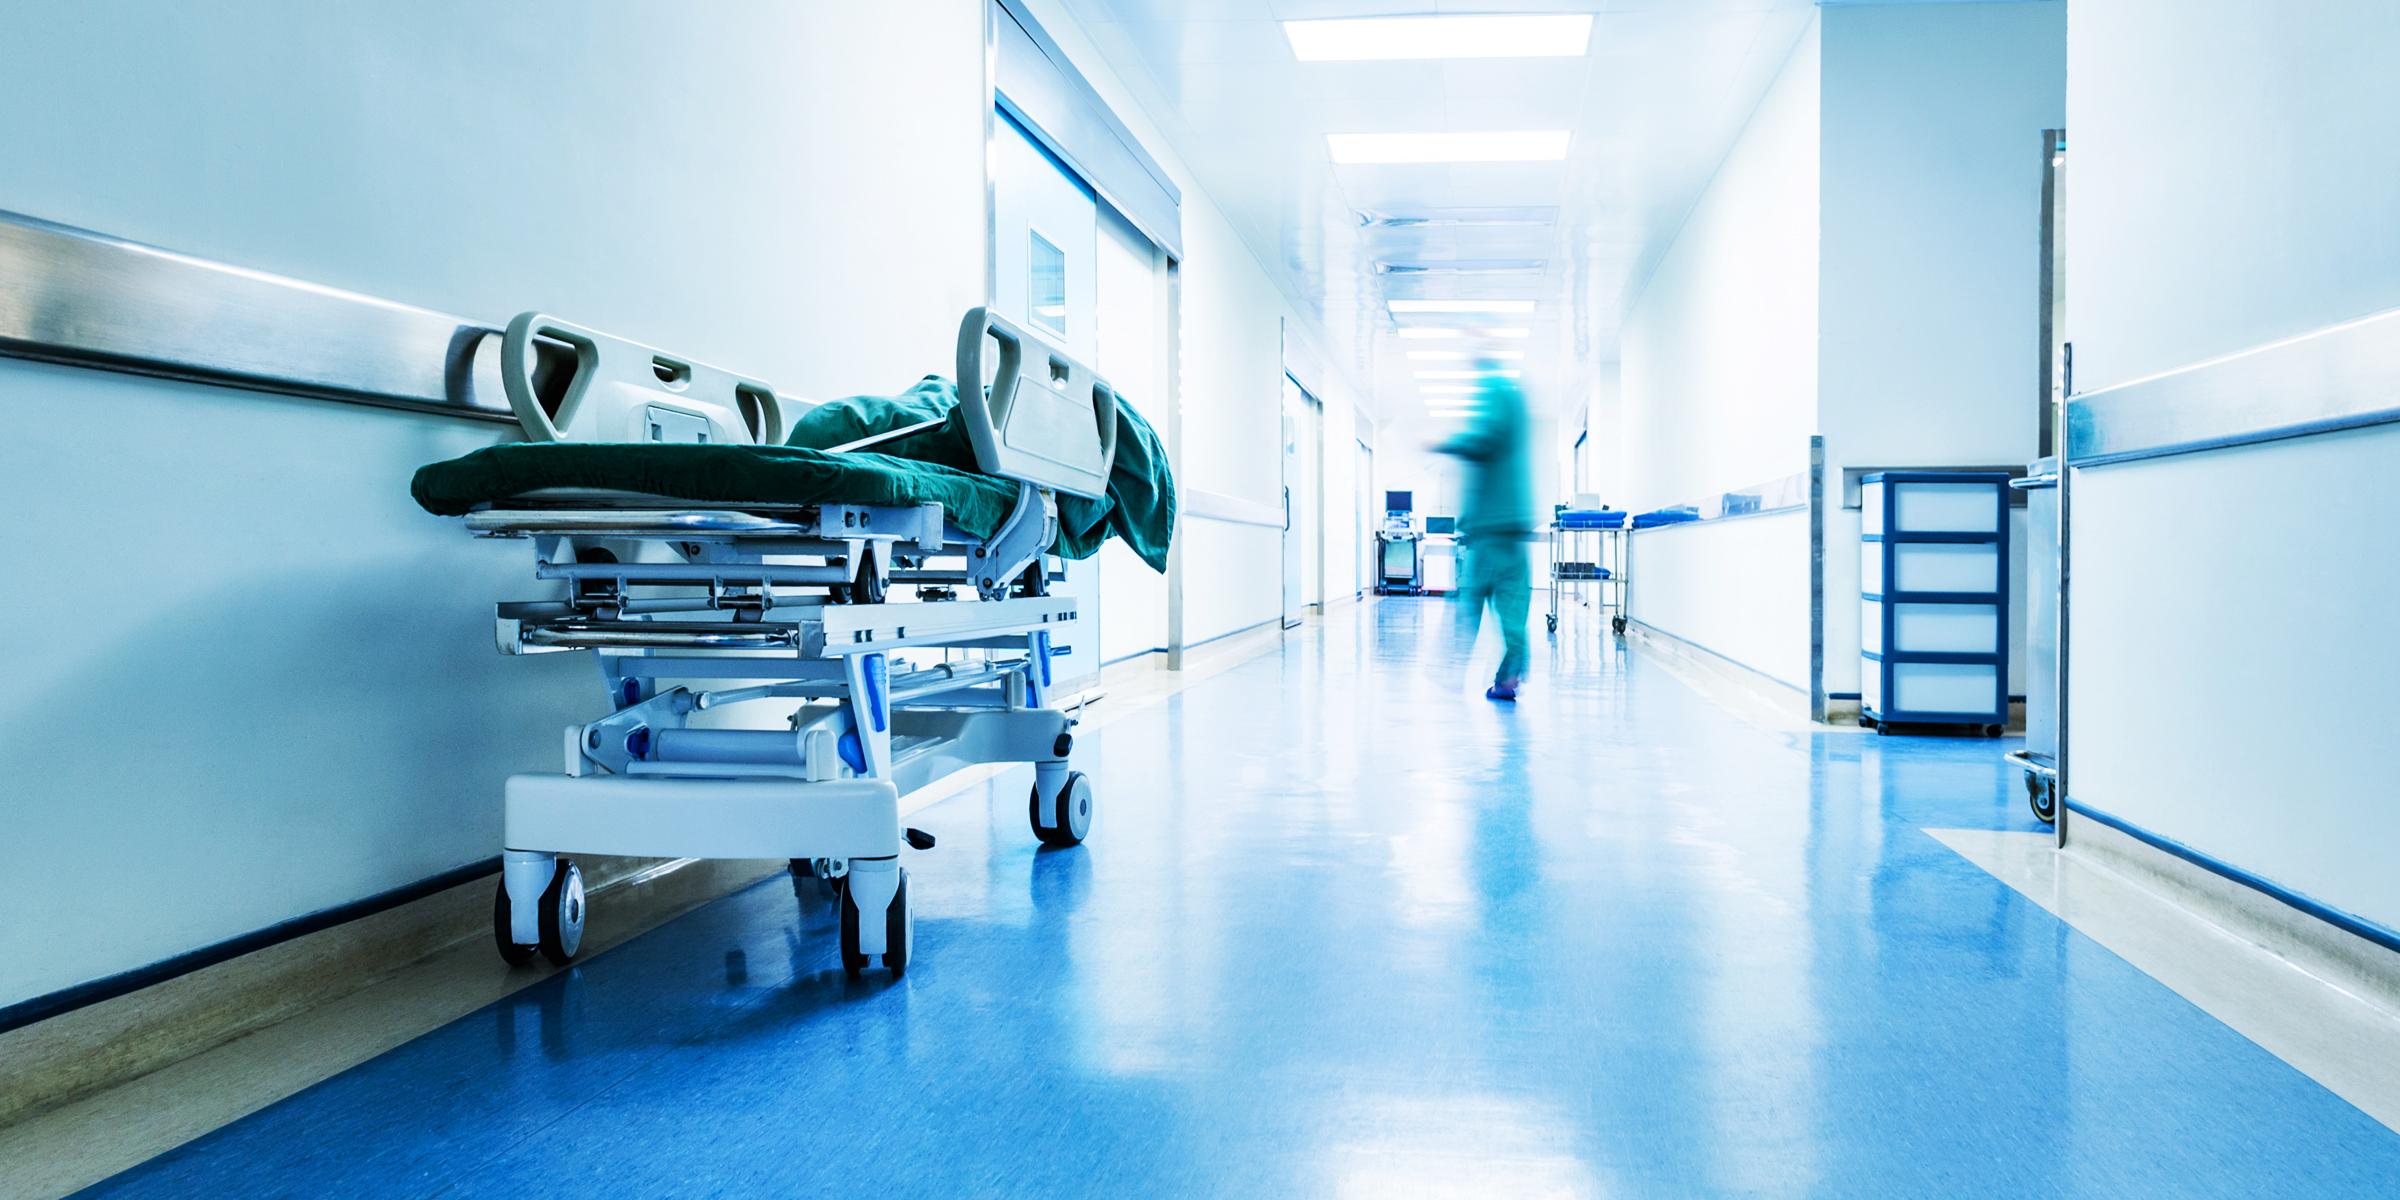 A hospital's aisle | Source: Shutterstock